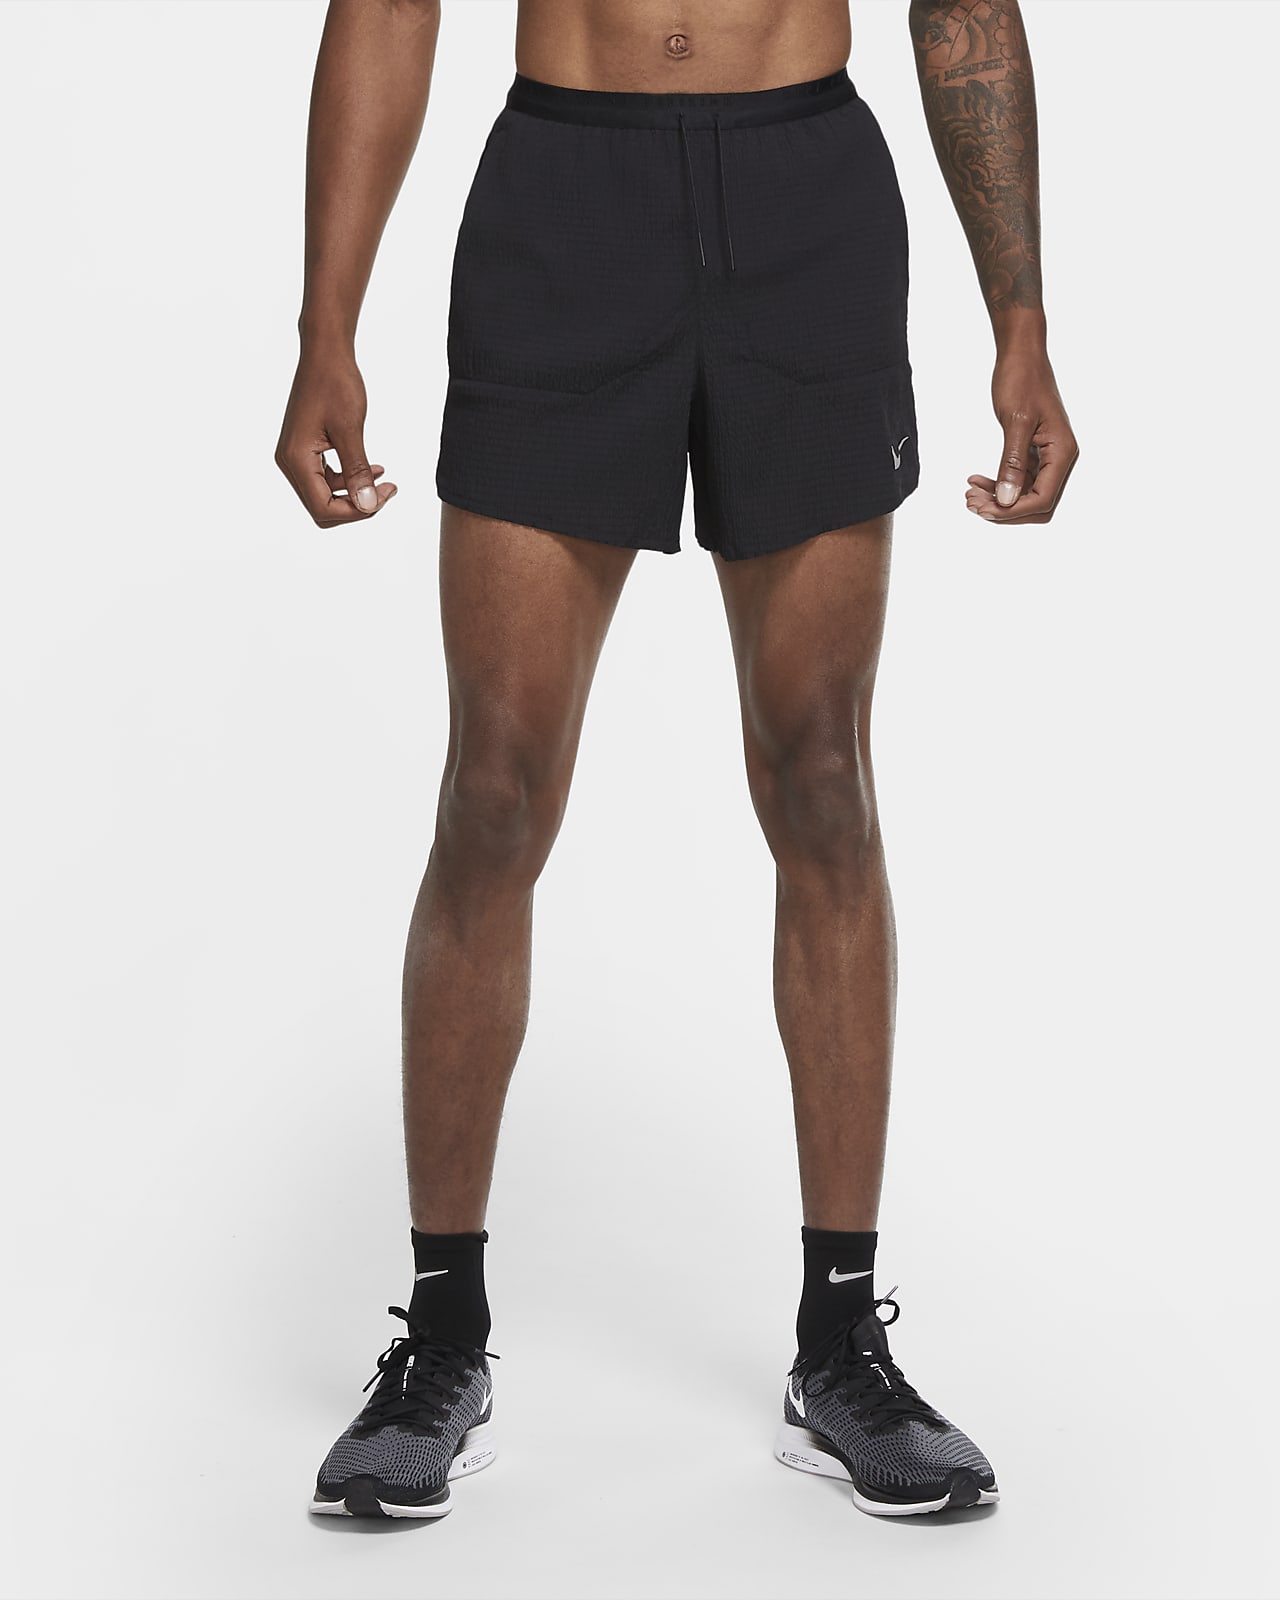 men's running shorts nike